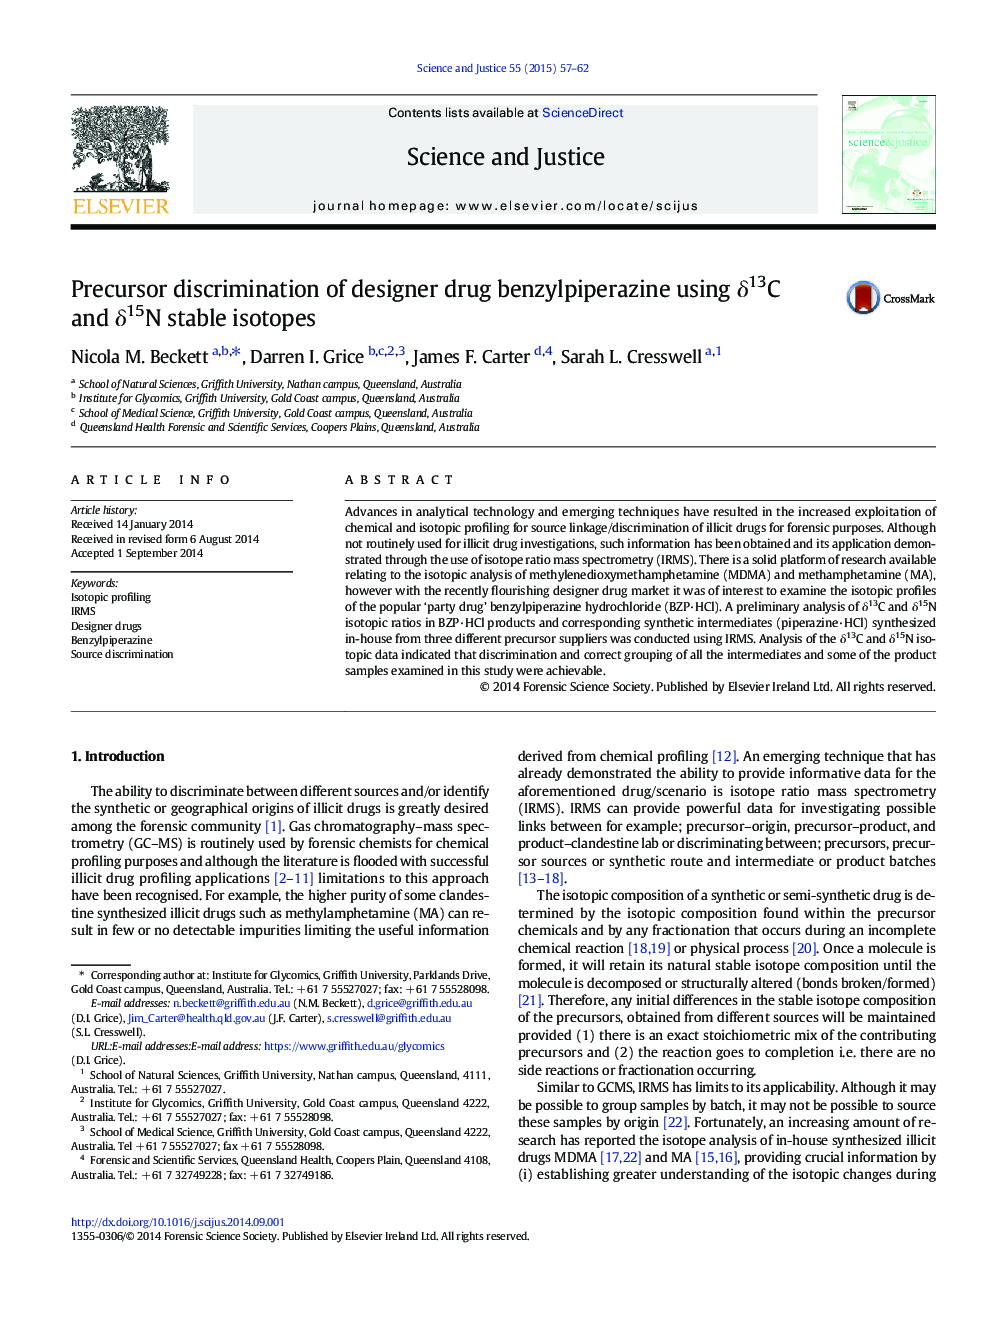 Precursor discrimination of designer drug benzylpiperazine using δ13C and δ15N stable isotopes